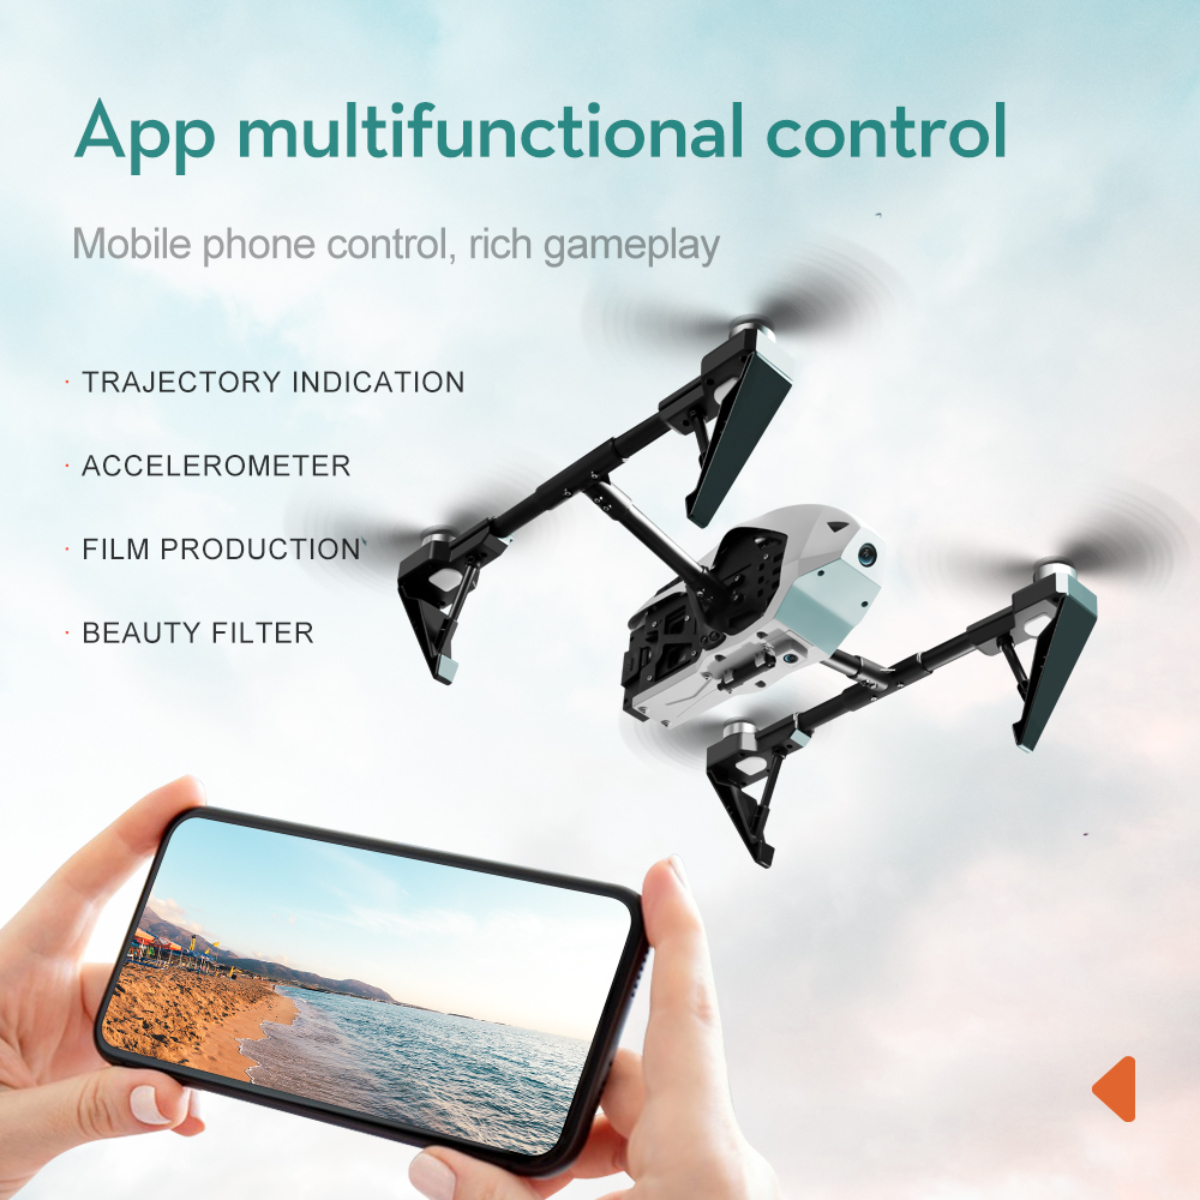 Spielzeugflugzeug BYTELIKE RC Drohne weiß Brushless Drohne, Aerial Quadcopter HD Kamera Alloy